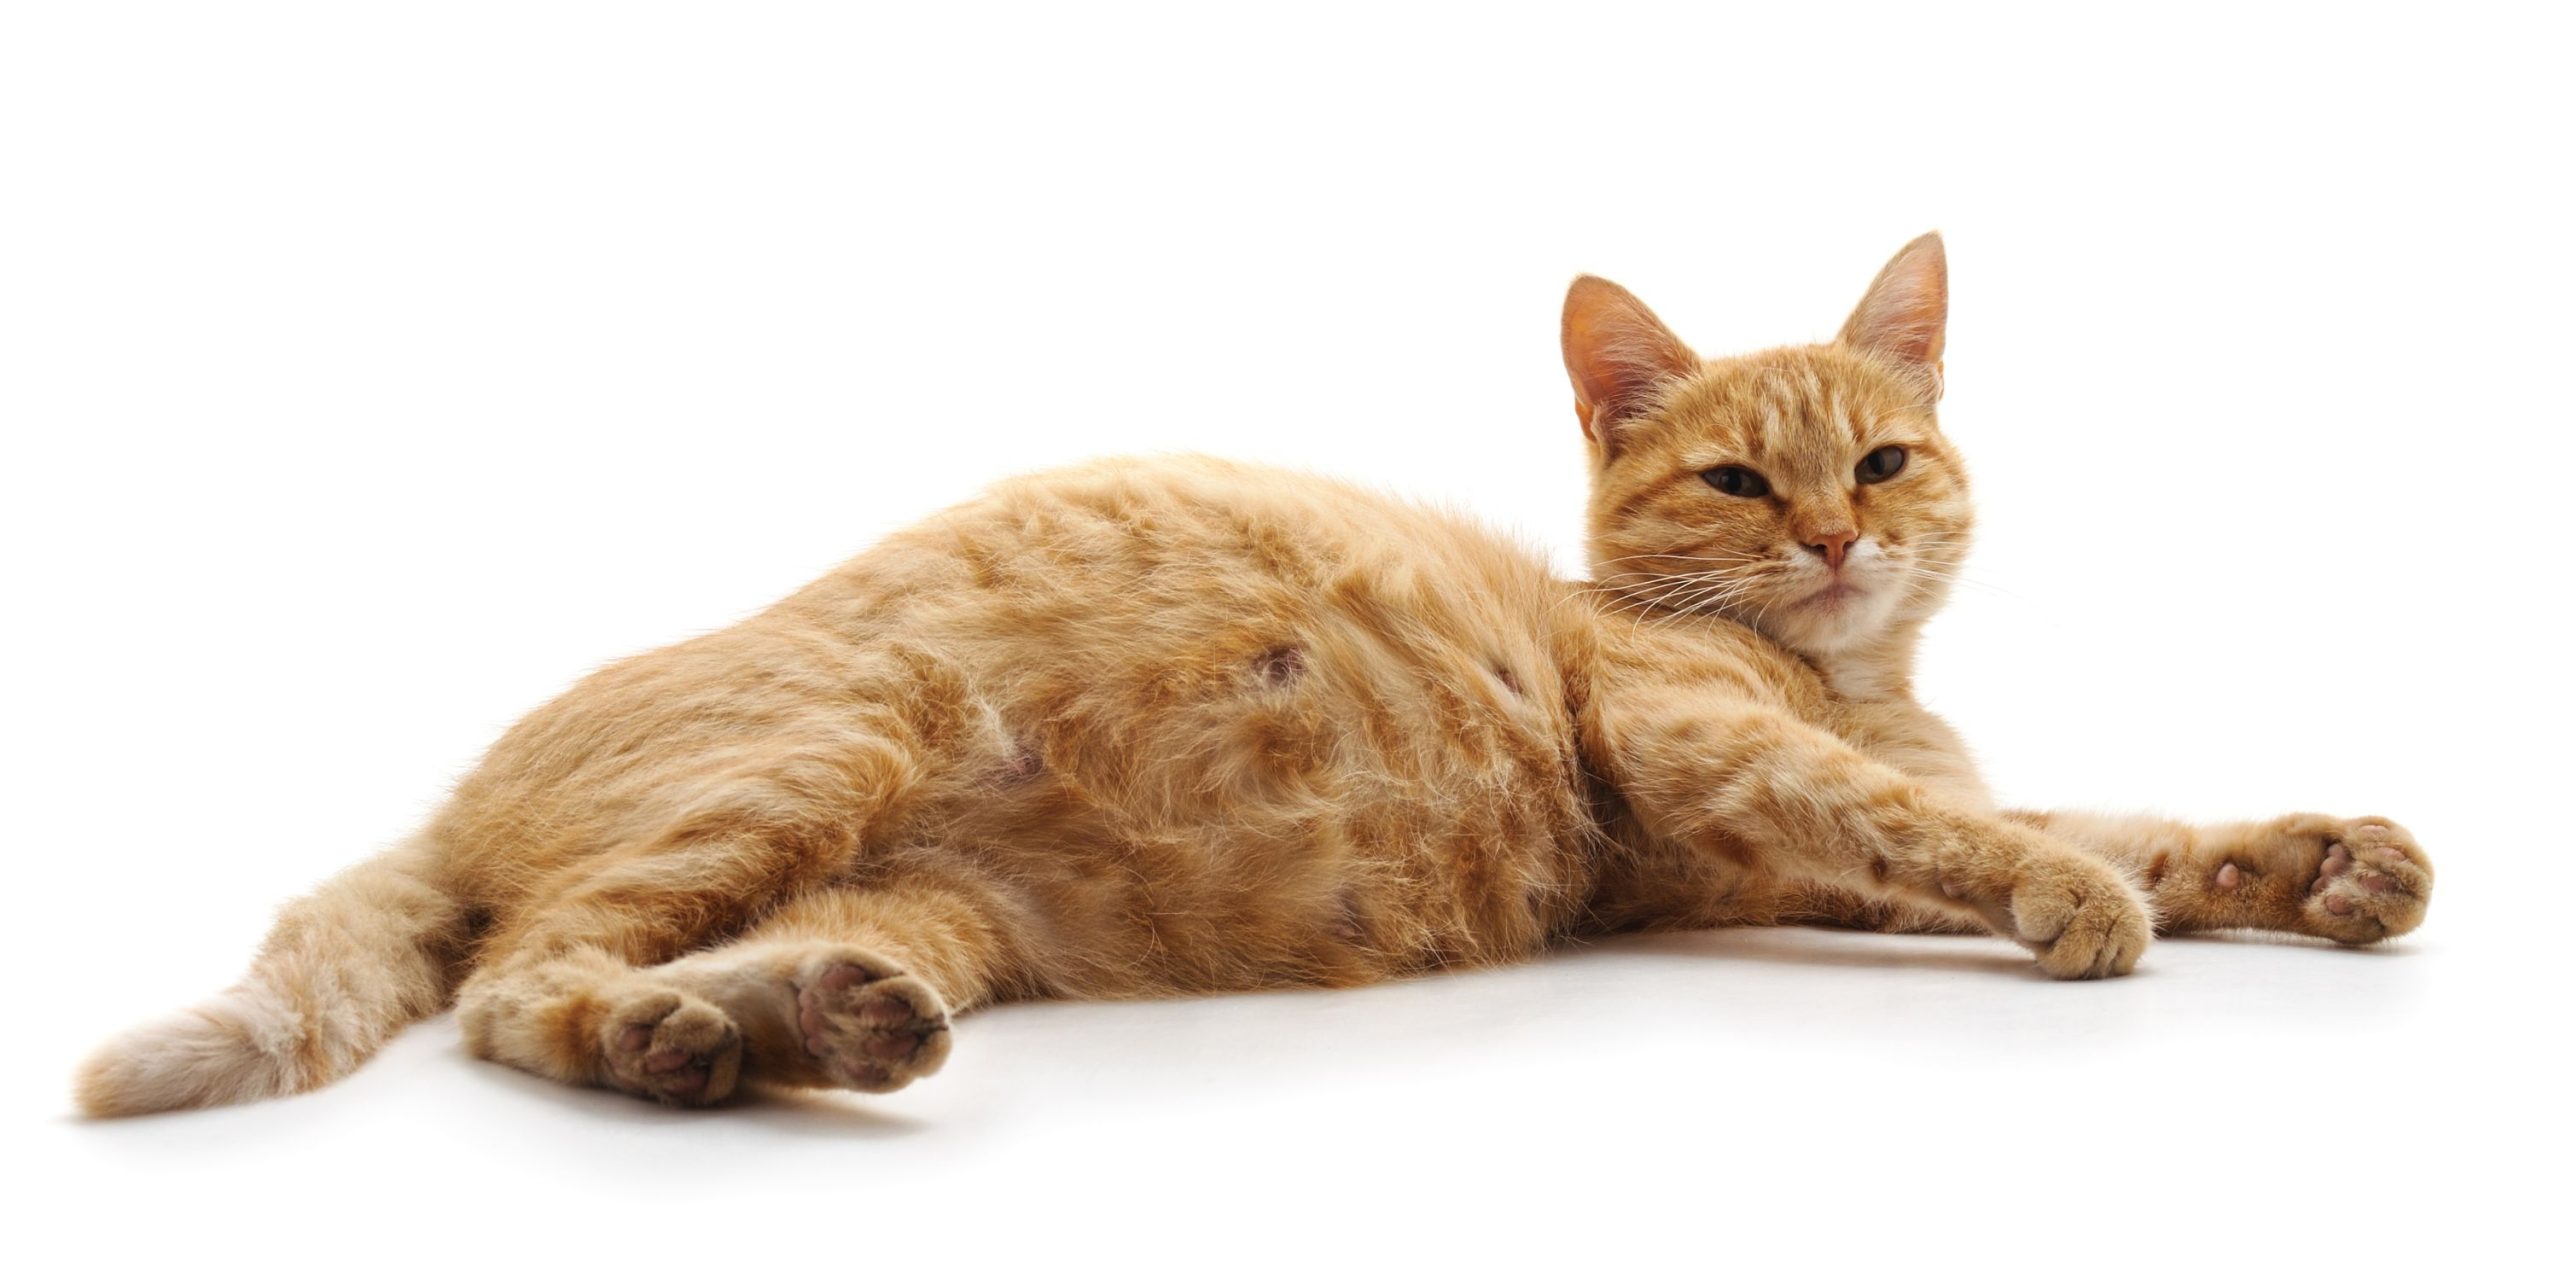 Regular Cat Nipples Vs Pregnant Cat Nipples – Signs and Changes